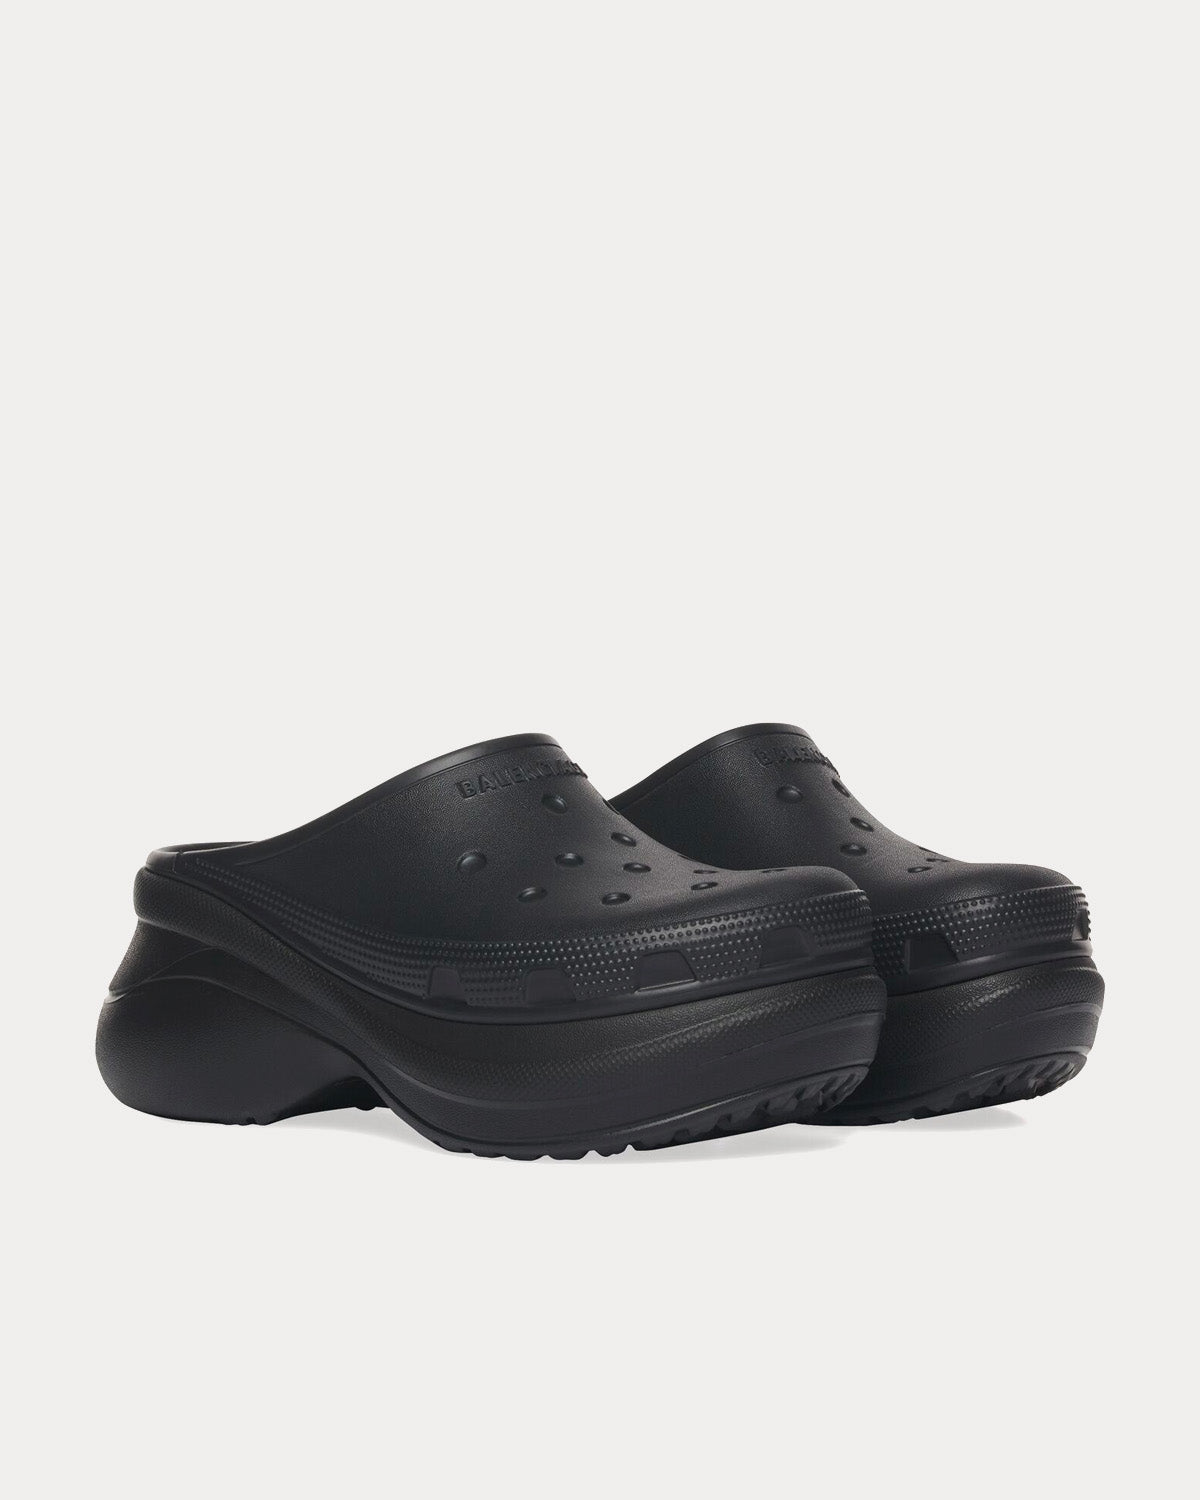 Balenciaga x Crocs - Rubber Mule Black Slip Ons